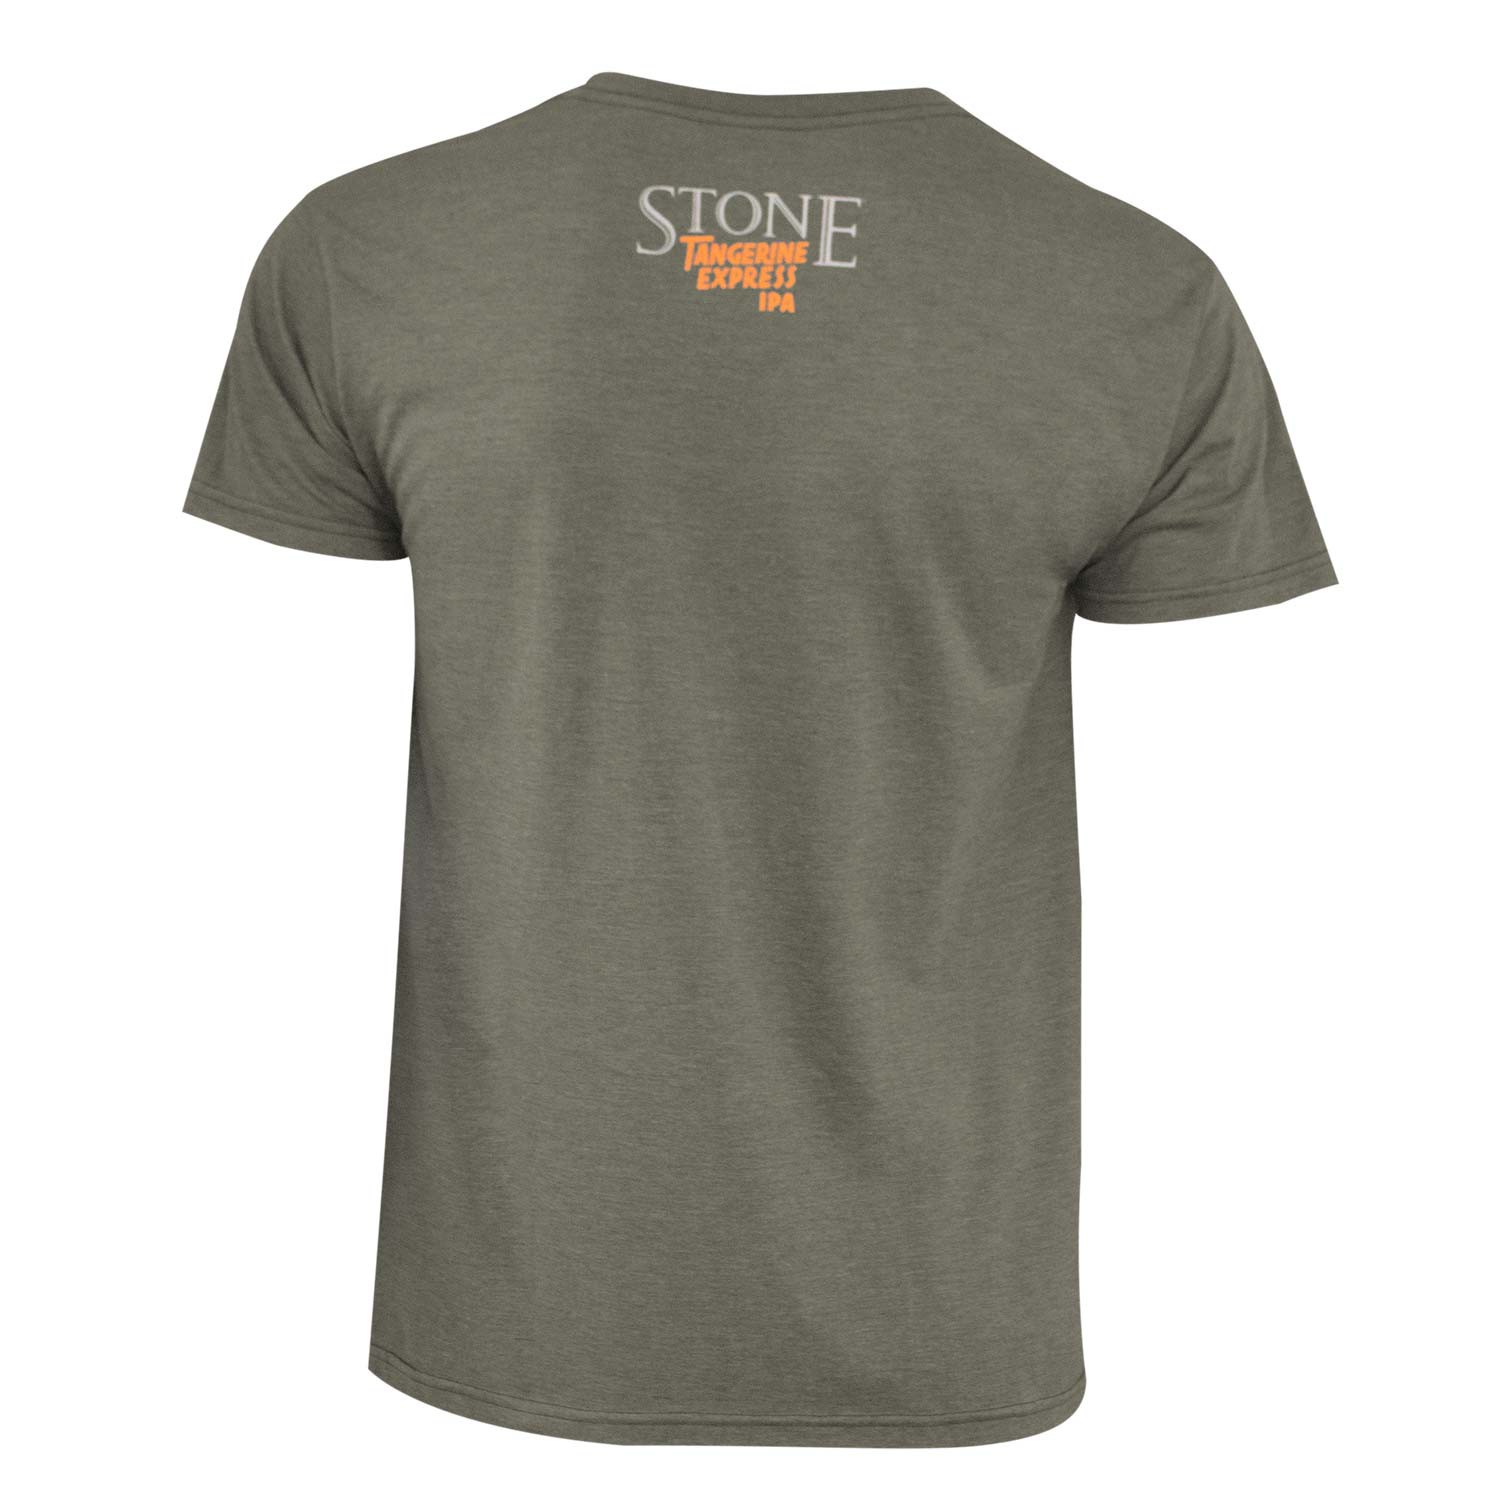 Stone Brewing Co. Tangerine Express Tee Shirt